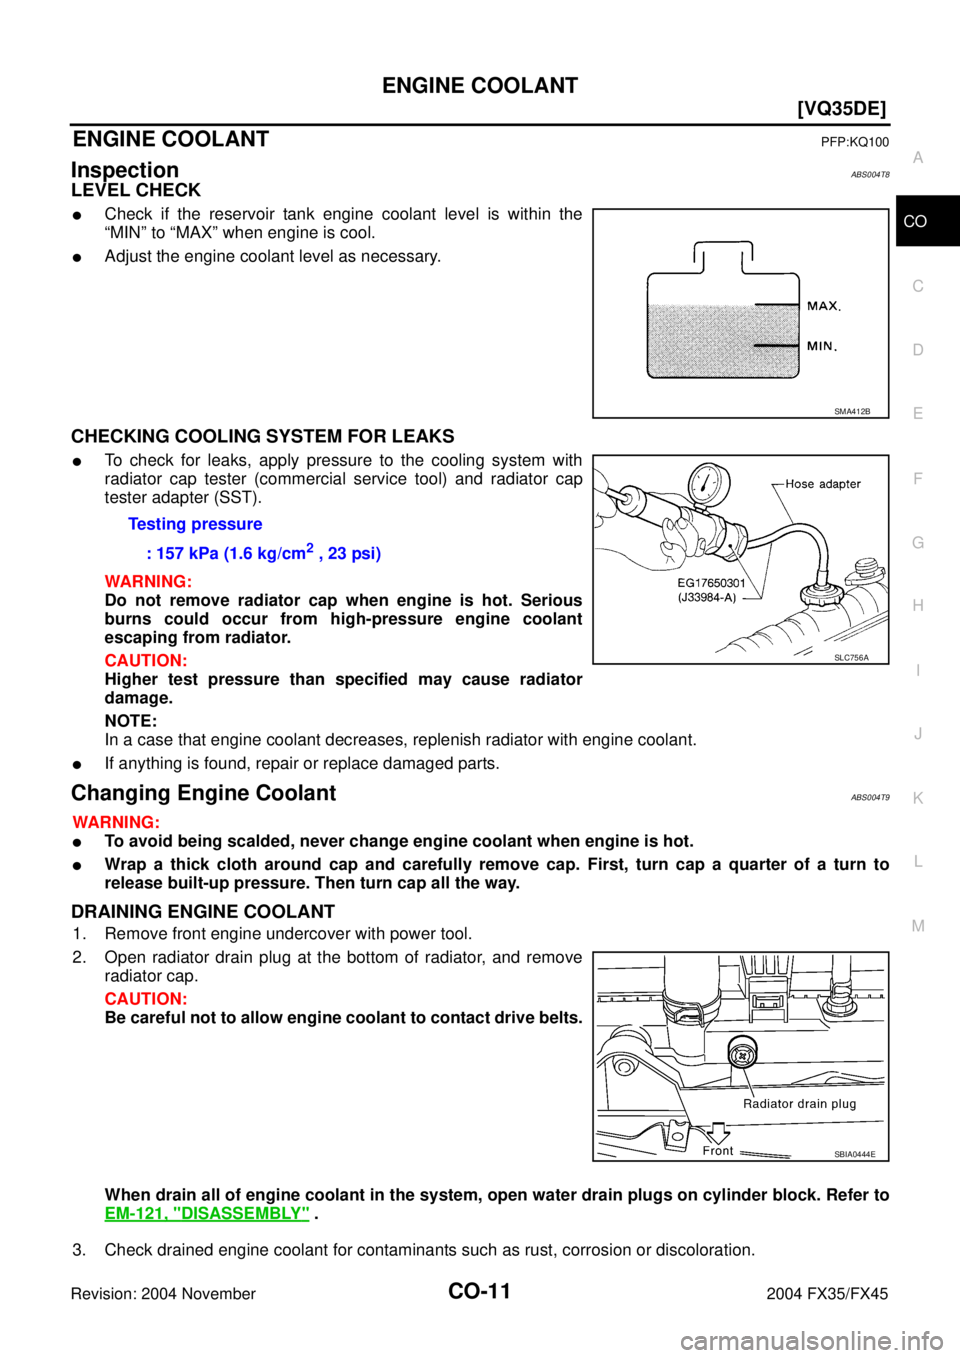 INFINITI FX35 2004  Service Manual ENGINE COOLANT
CO-11
[VQ35DE]
C
D
E
F
G
H
I
J
K
L
MA
CO
Revision: 2004 November 2004 FX35/FX45
ENGINE COOLANTPFP:KQ100
InspectionABS004T8
LEVEL CHECK
Check if the reservoir tank engine coolant level 